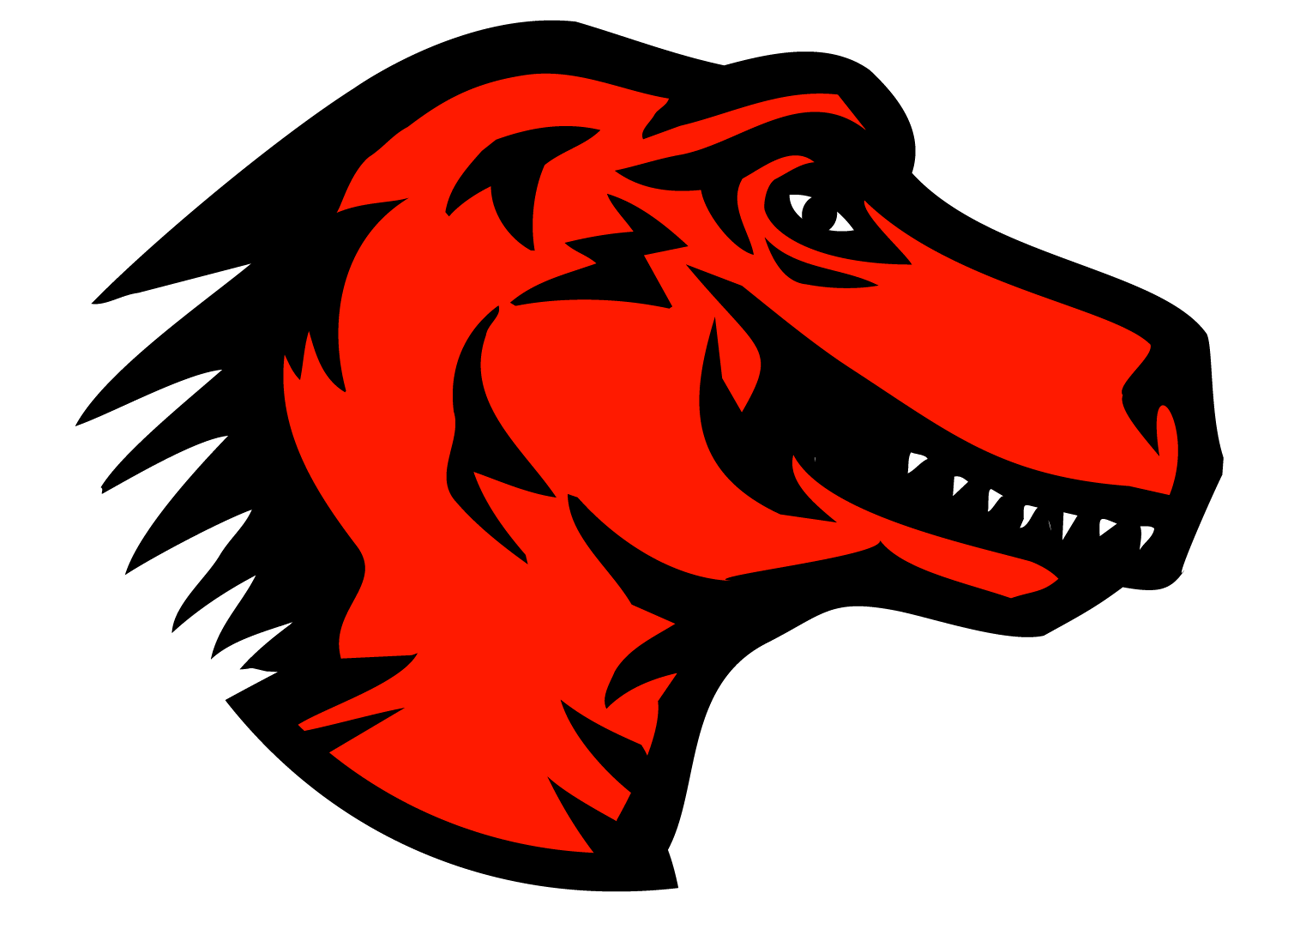 Red Dinosaur Logo - File:Mozilla dinosaur head logo.png - Wikimedia Commons